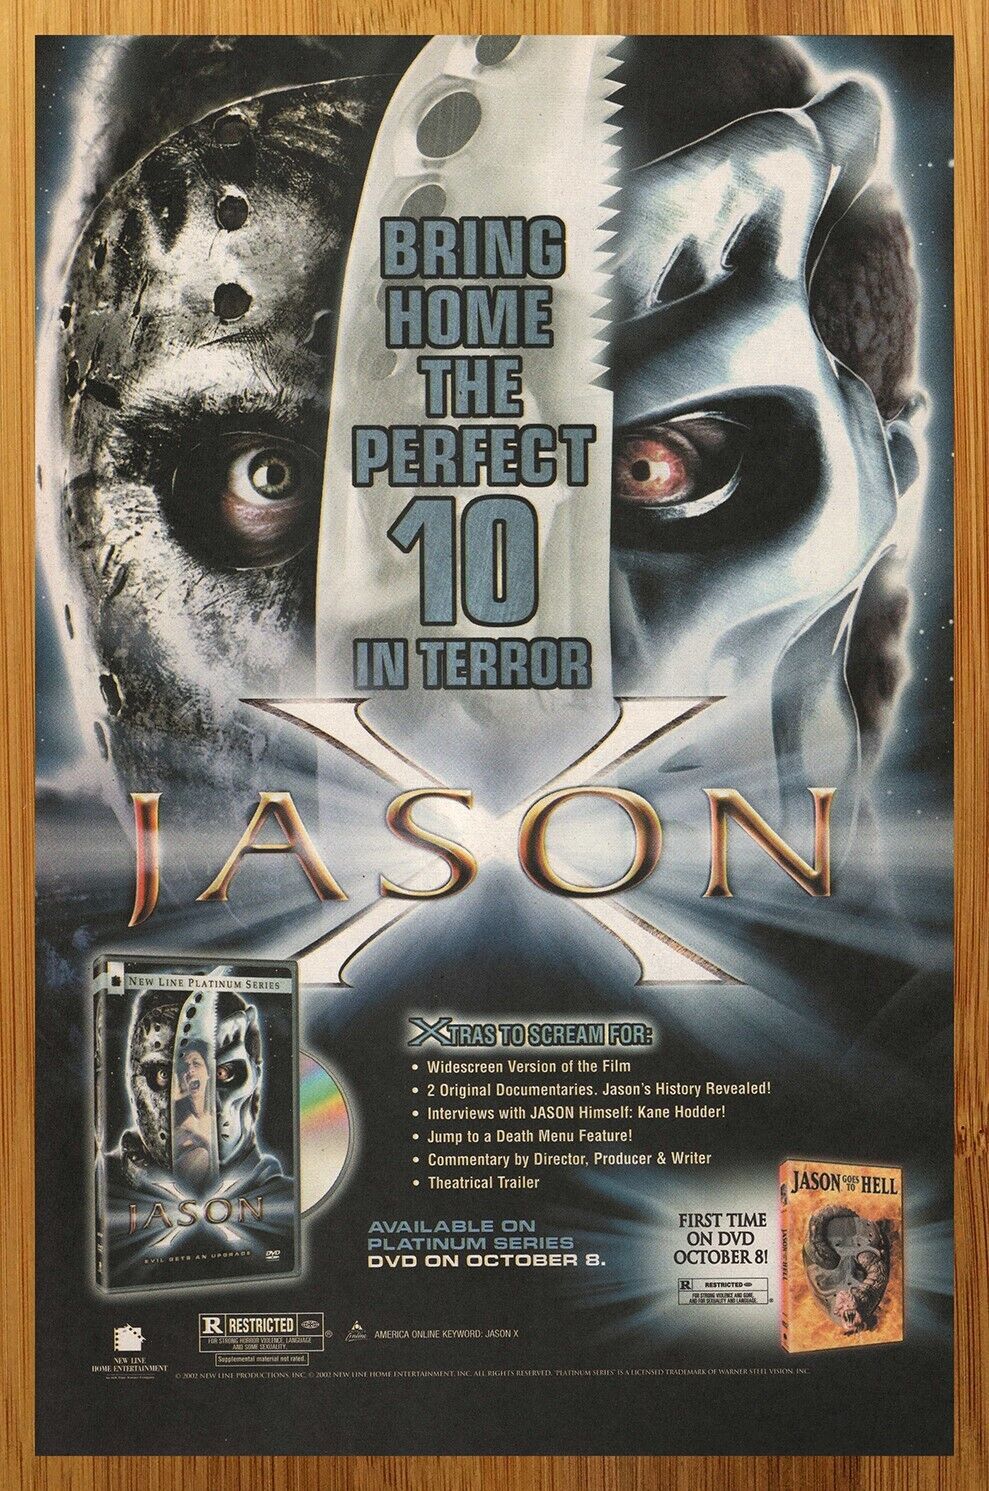 2002 Jason X Vintage Print Ad/Poster Friday 13th Horror Movie DVD Promo Art 00s